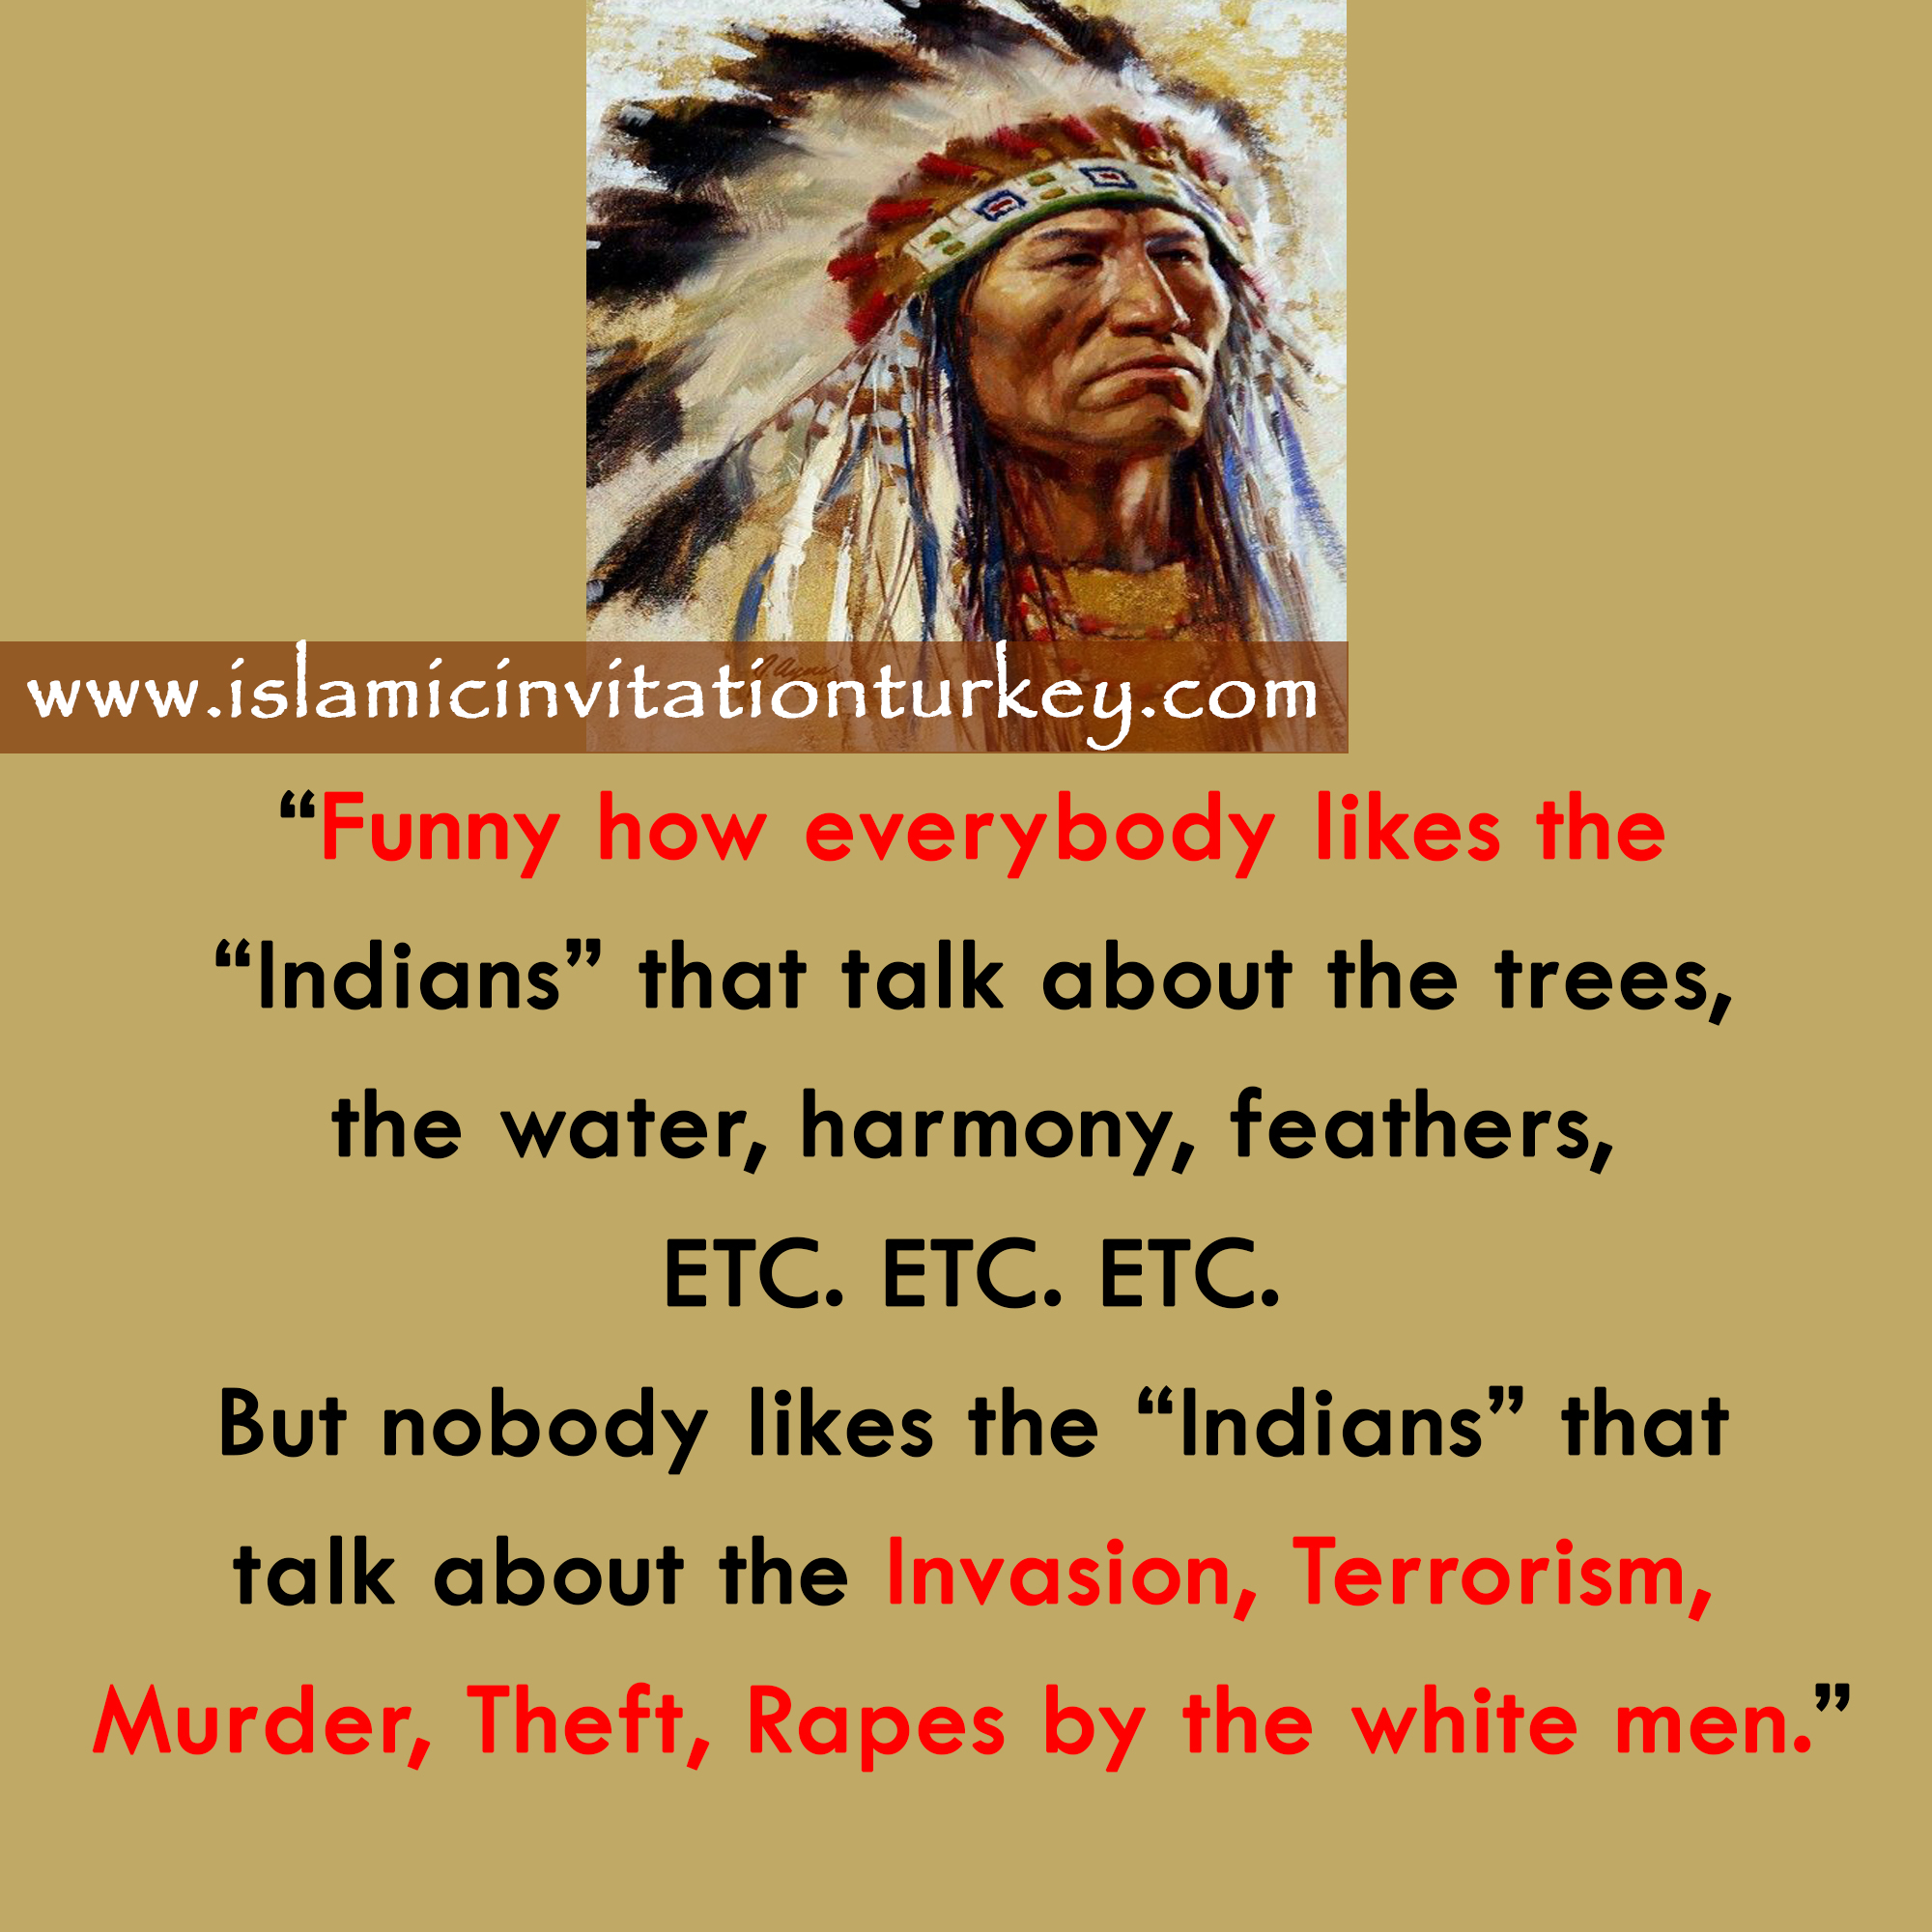 indians